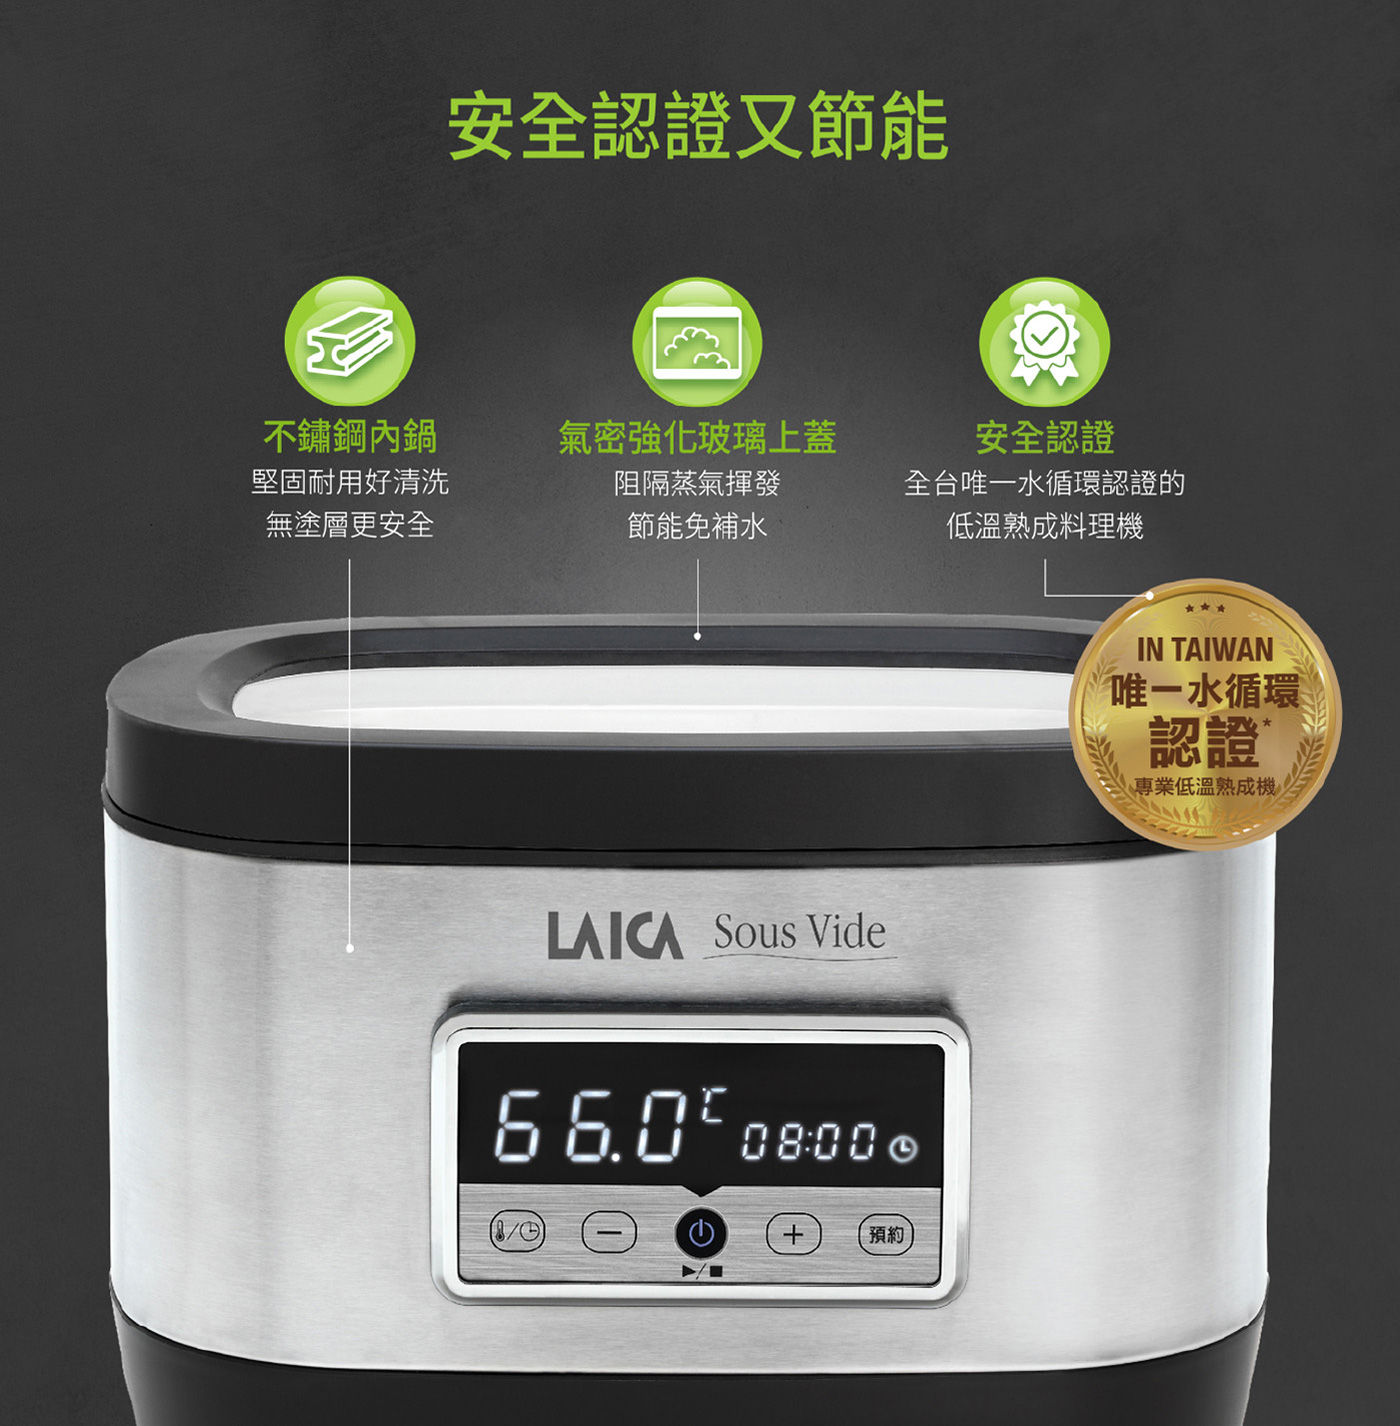 Laica 微電腦低溫熟成料理機 義大利時尚設計工藝